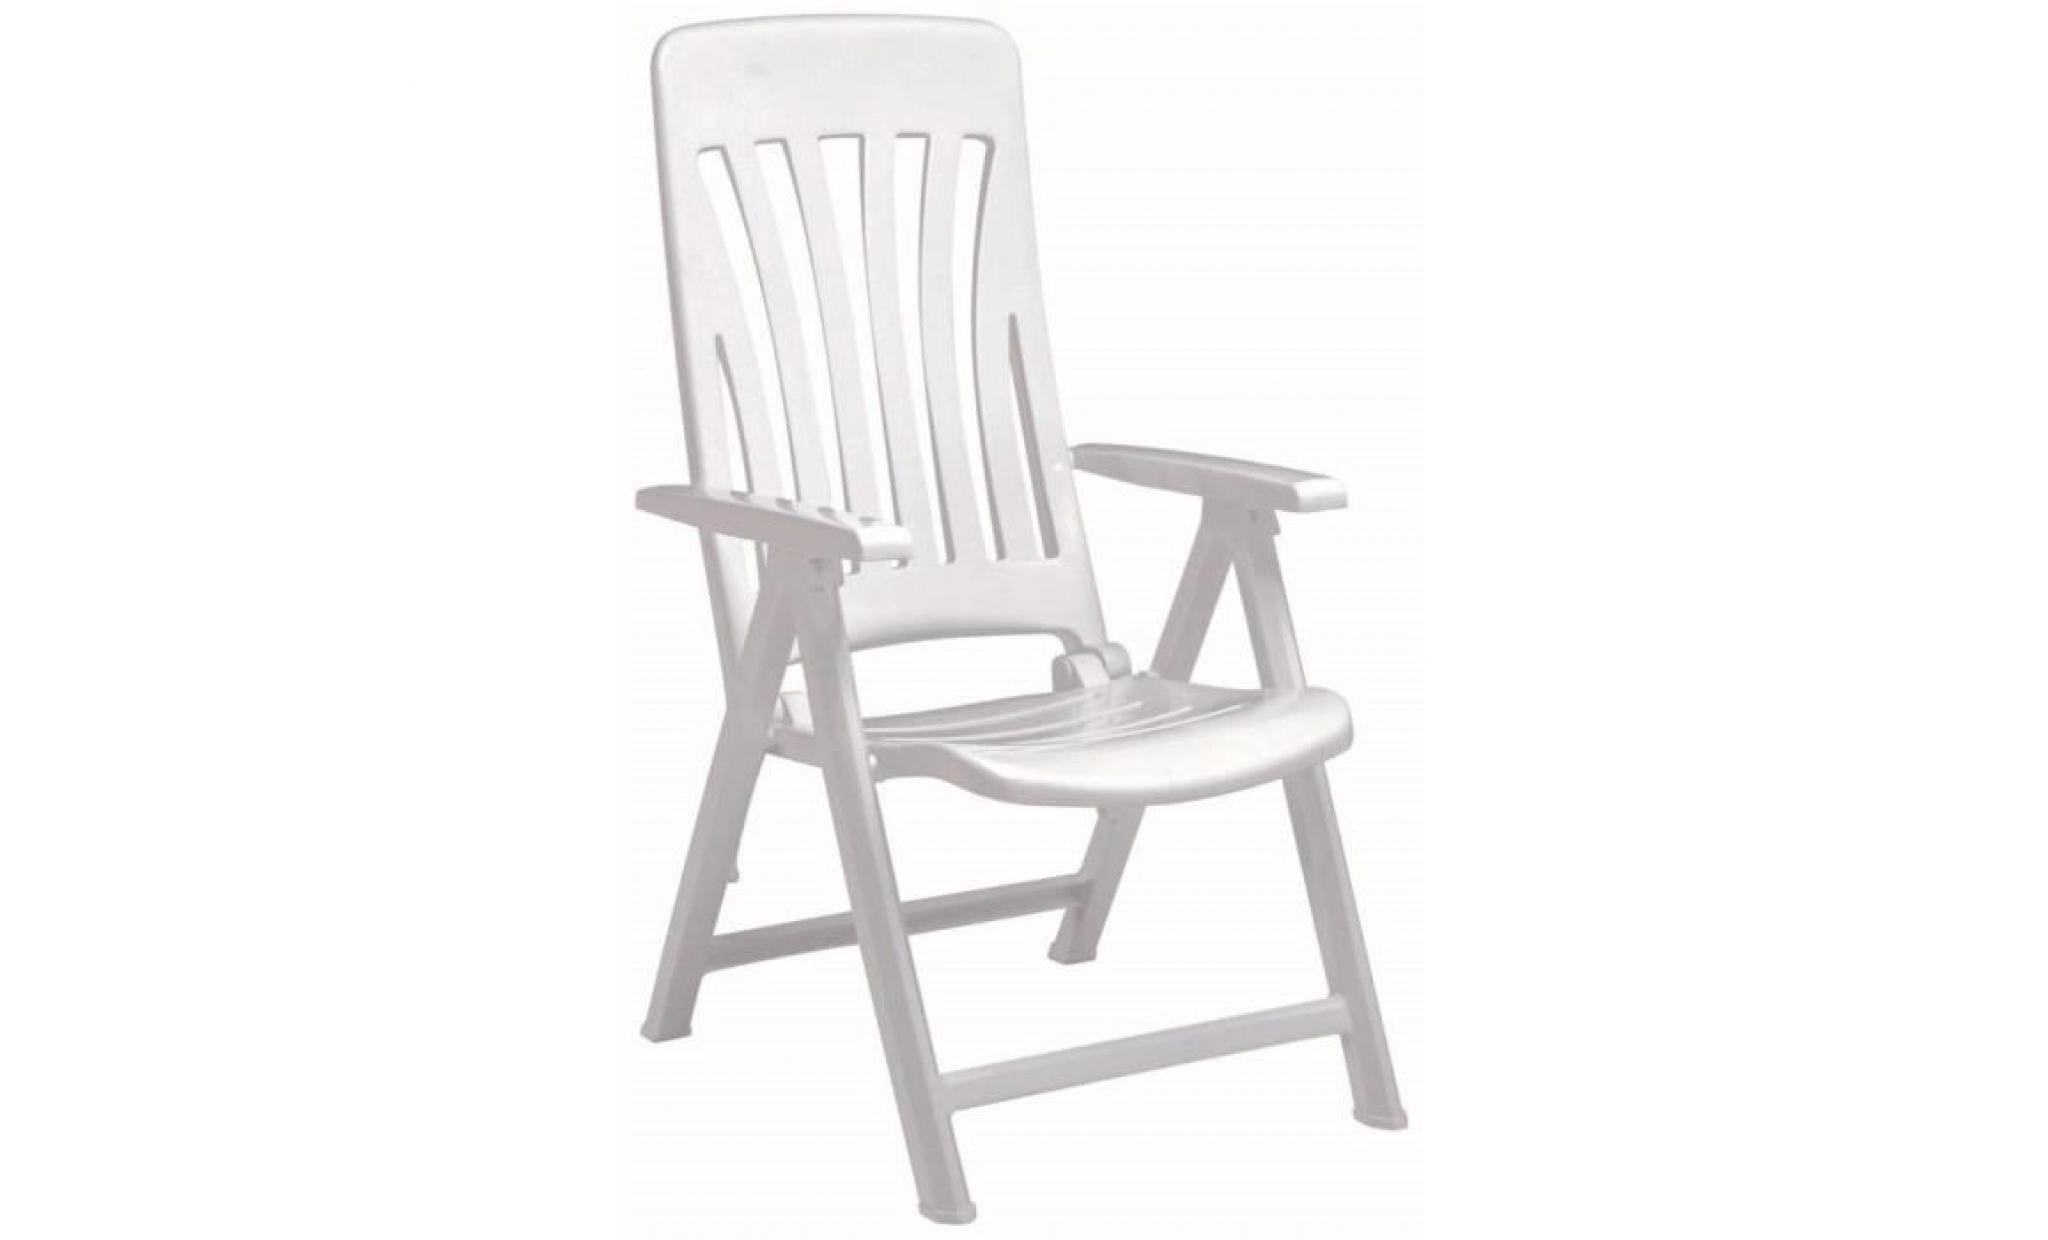 resol   blanes pliante de jardin multi positions fauteuil   blanc en plastique